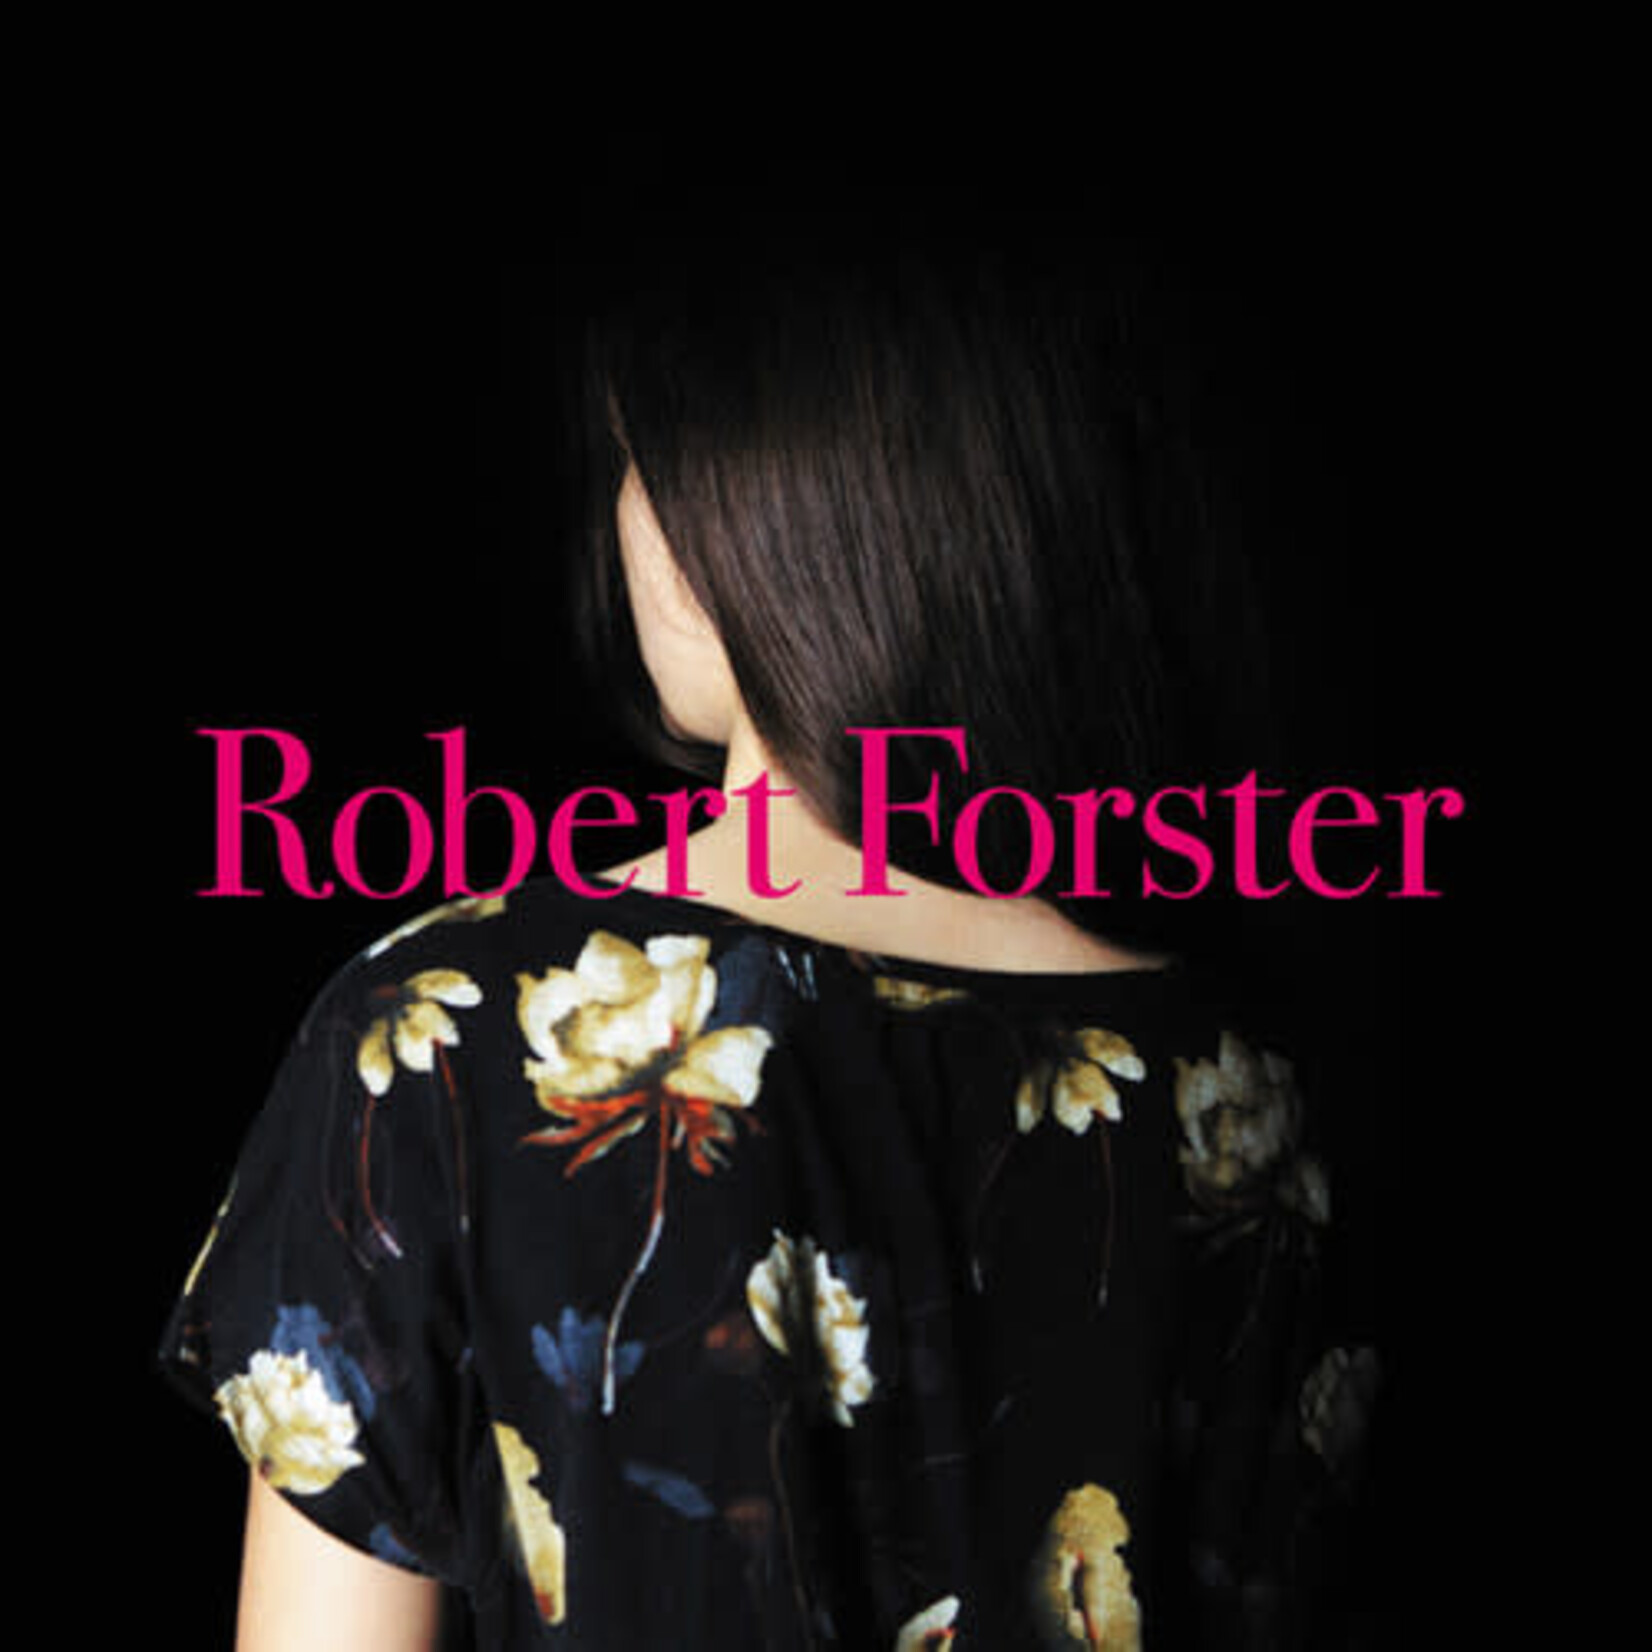 Robert Forster - Songs To Play - Vinyl LP (NEW)